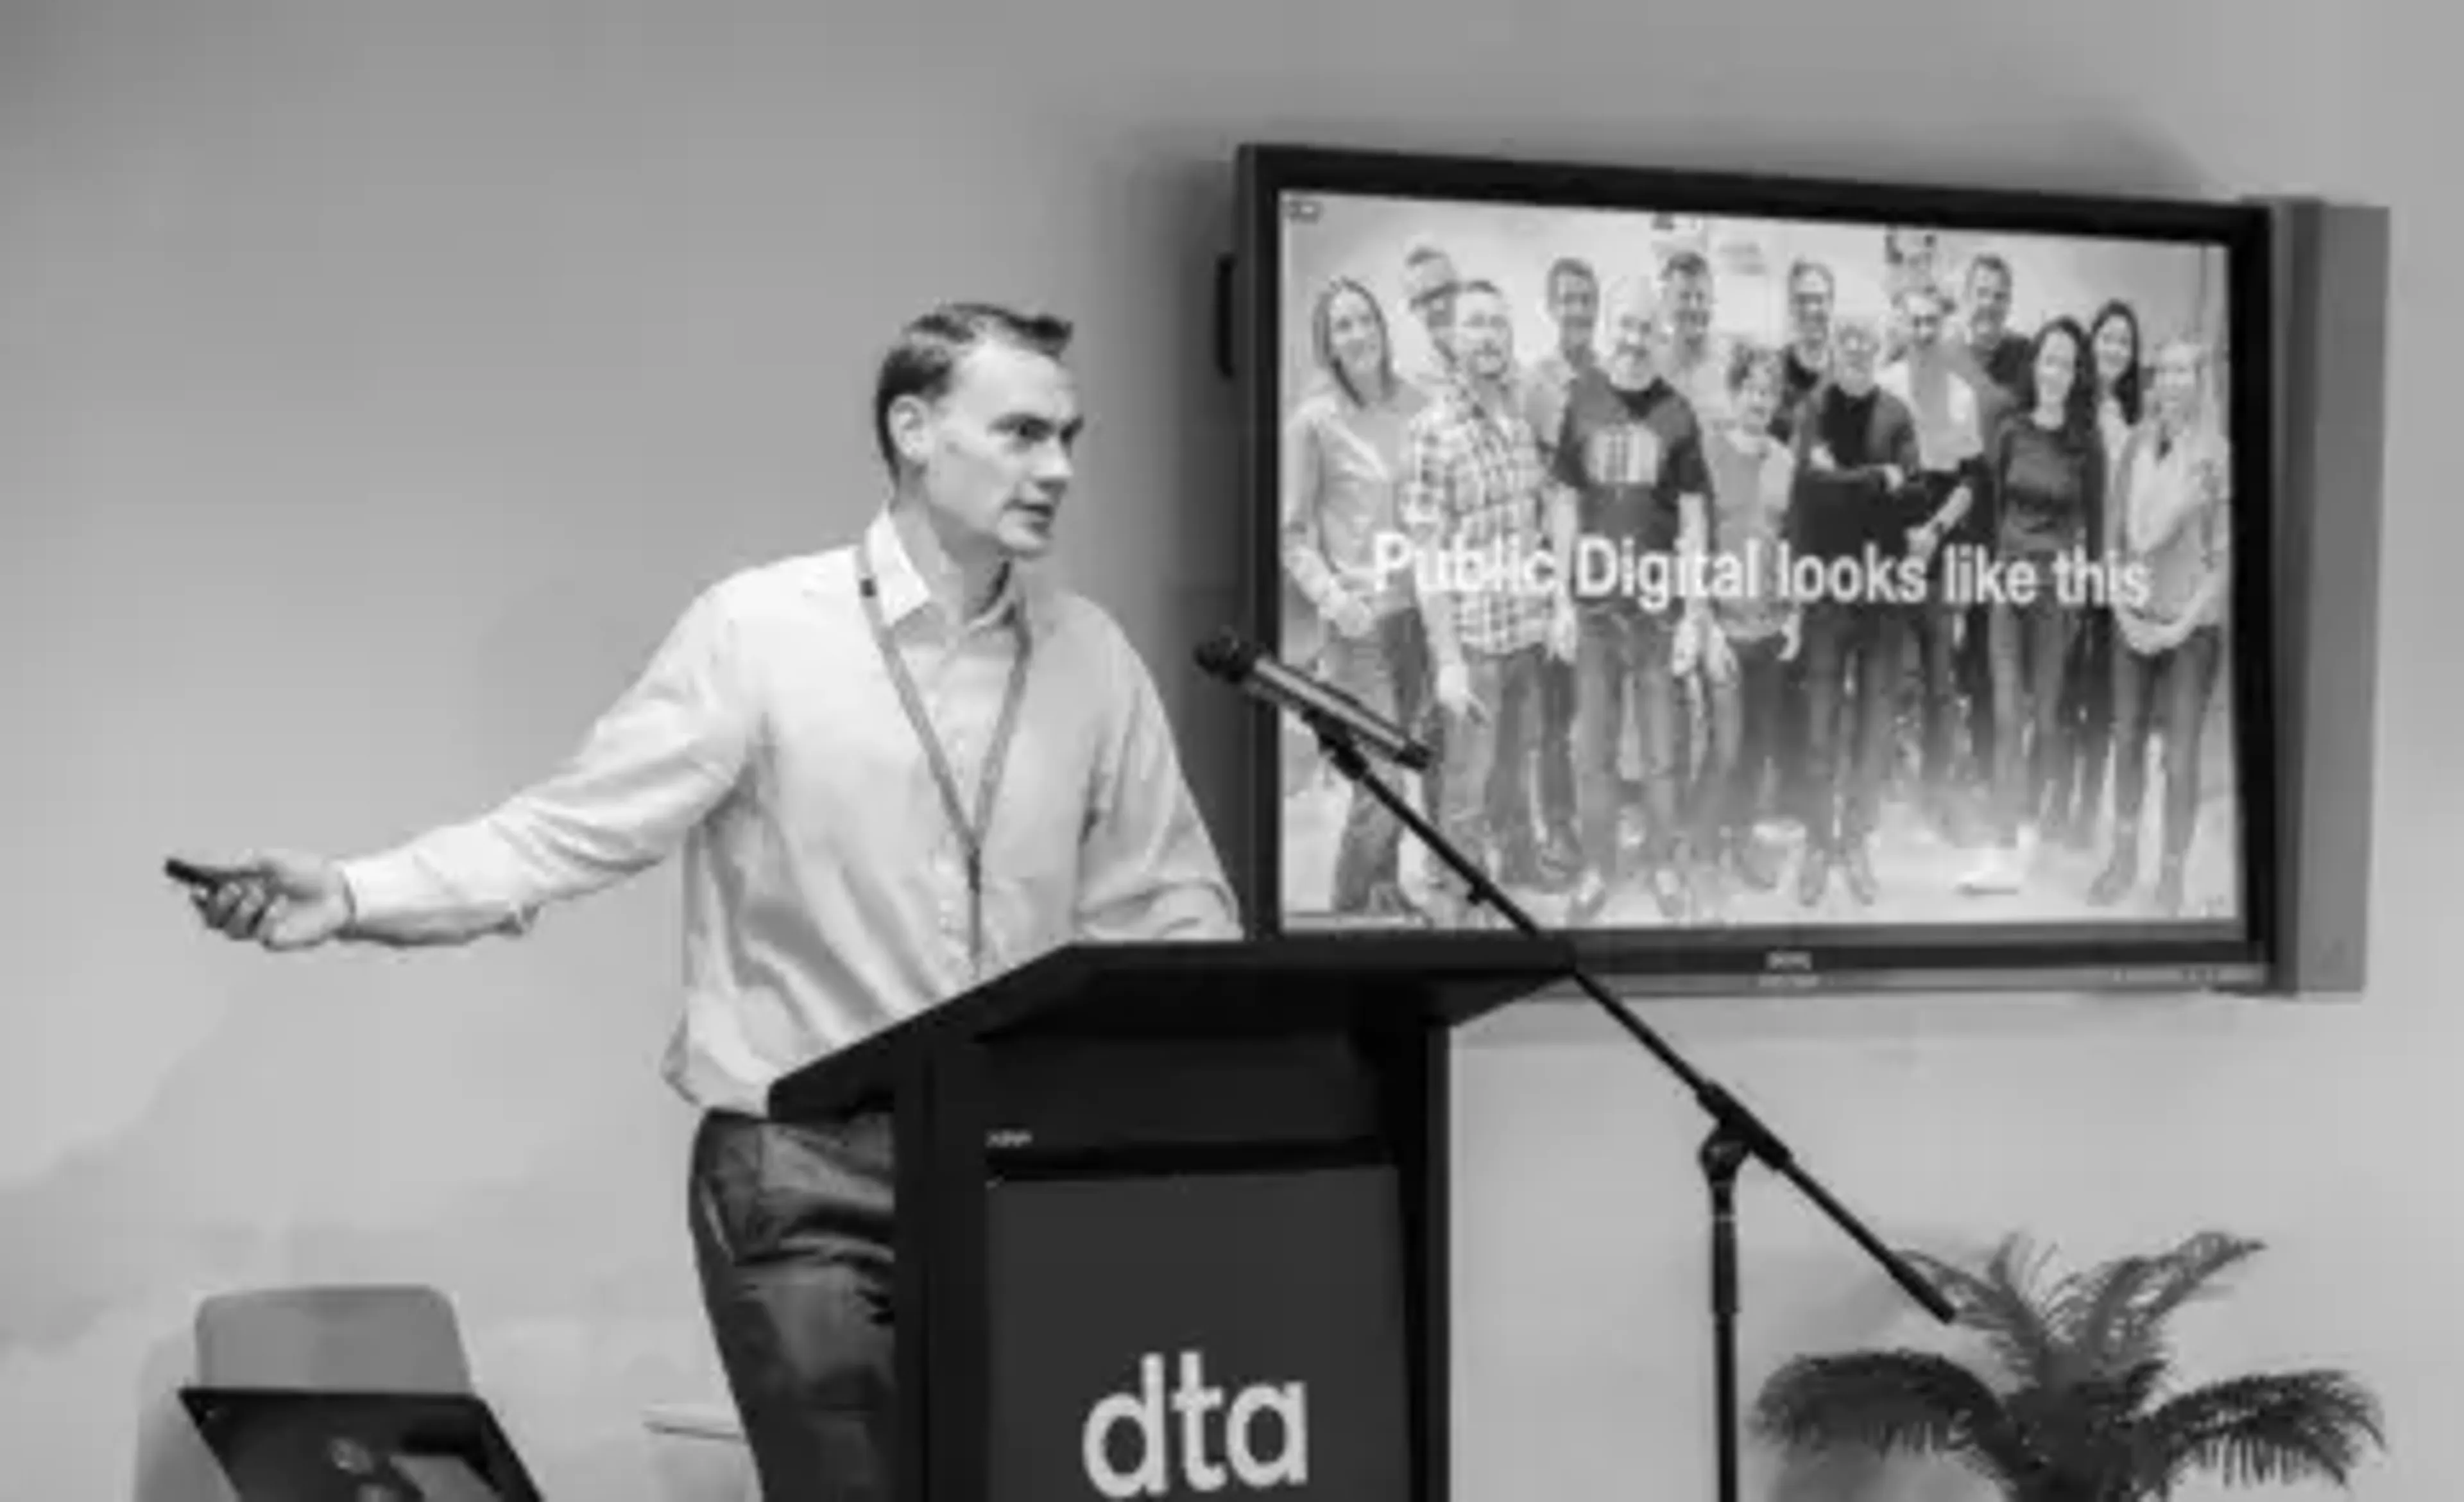 Andrew Greenway's presentation in Australia